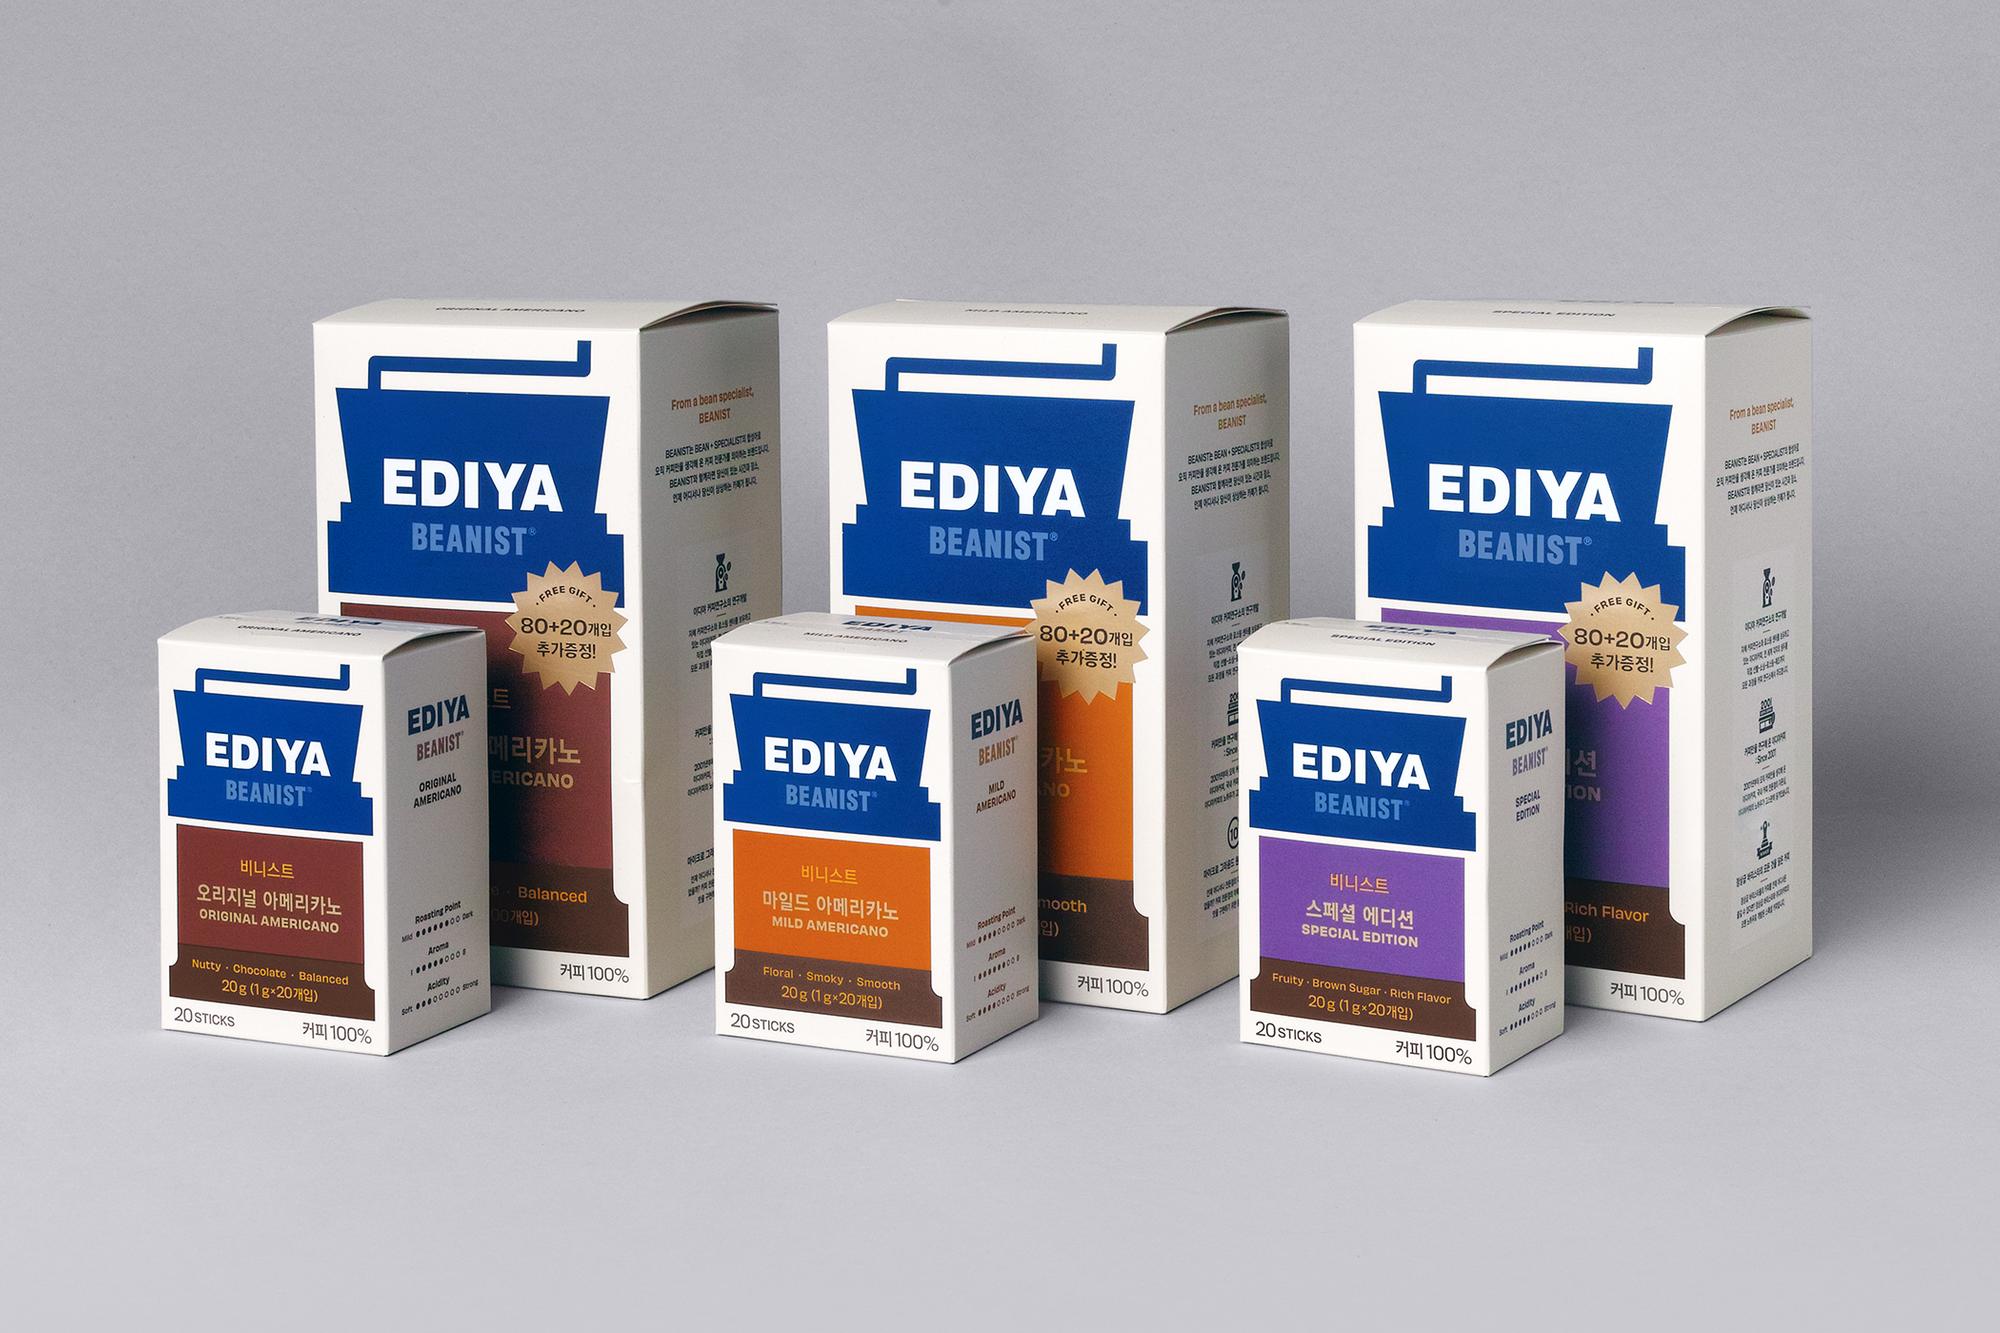 Coffee branding and packaging – Ediya Beanist by Studio fnt, South Korea